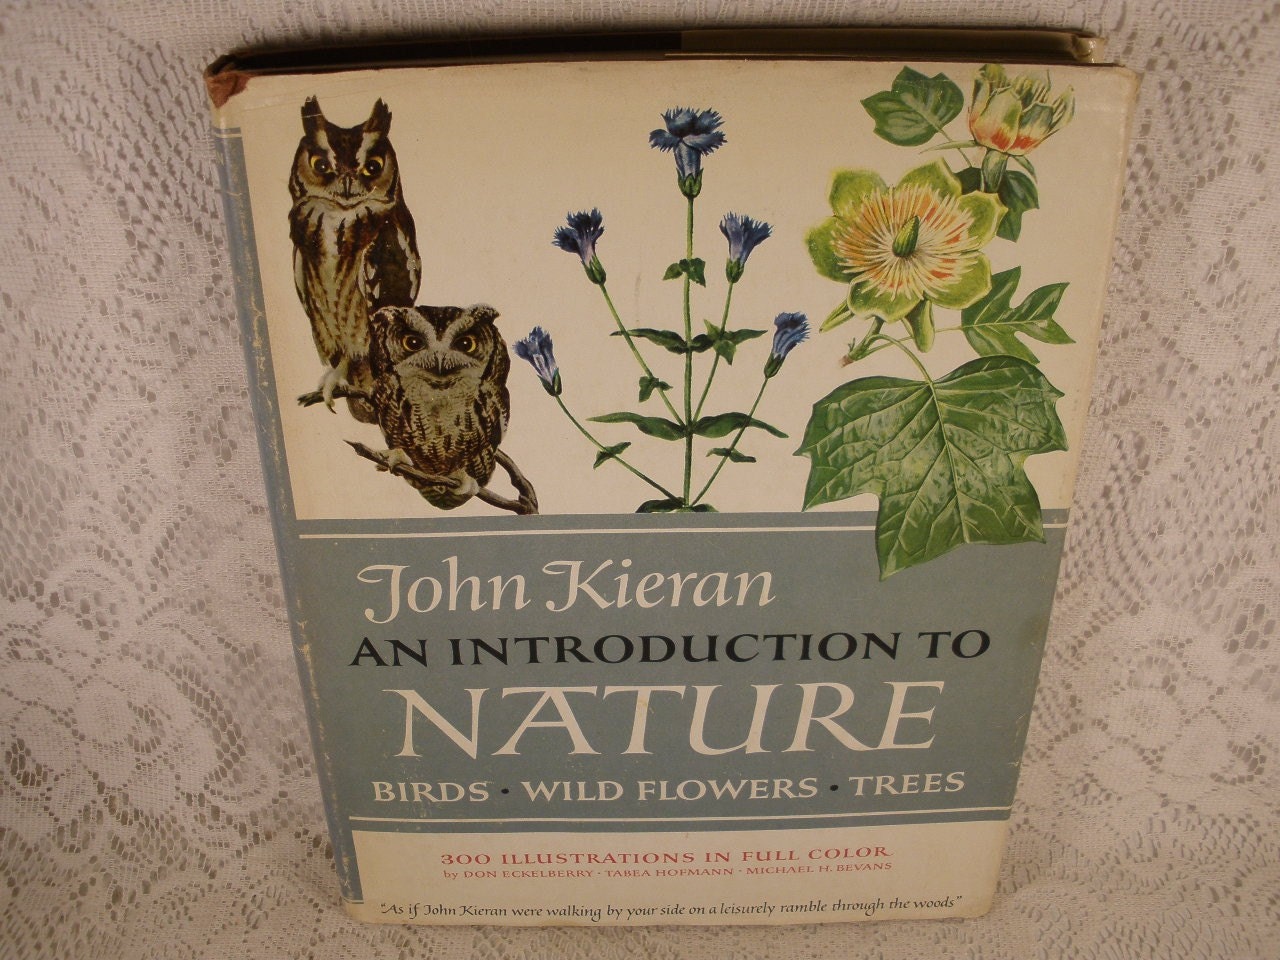 An introduction to nature: Birds, wild flowers, trees John Kieran